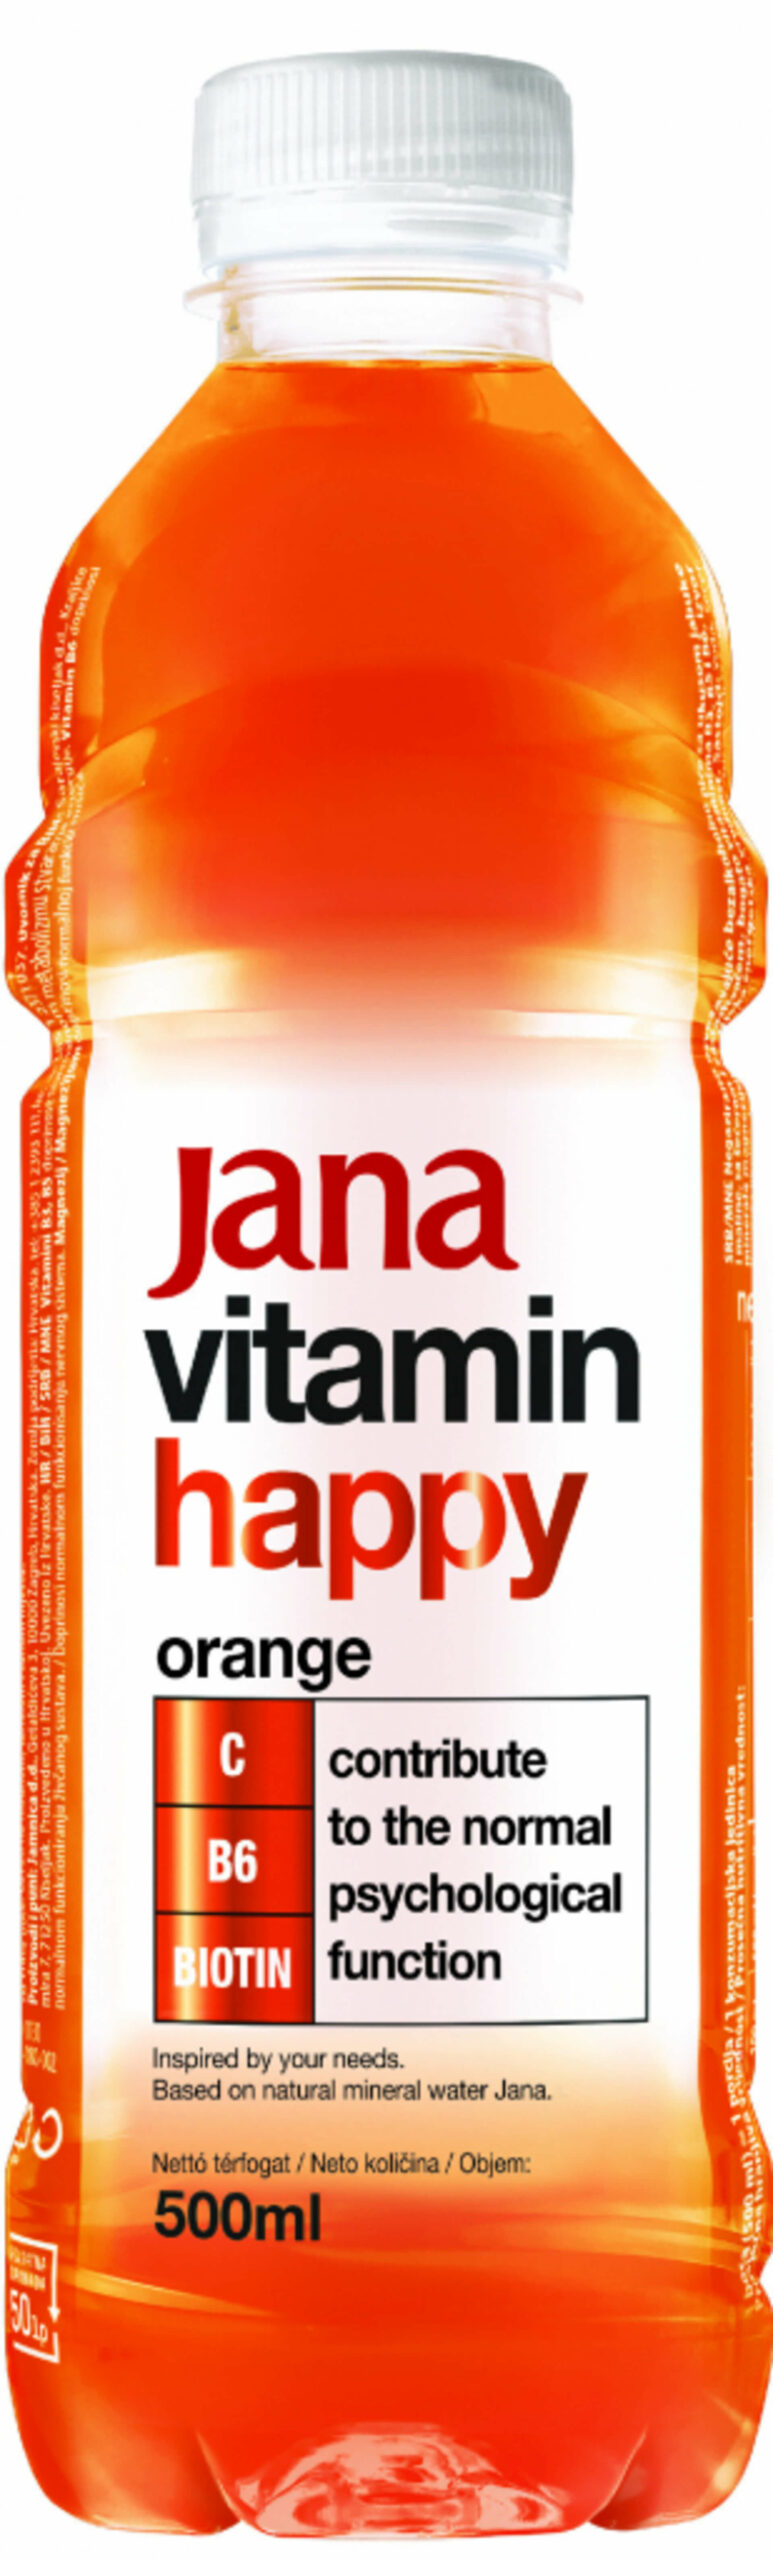 Jana Vitamin Water pomeranč 500 ml